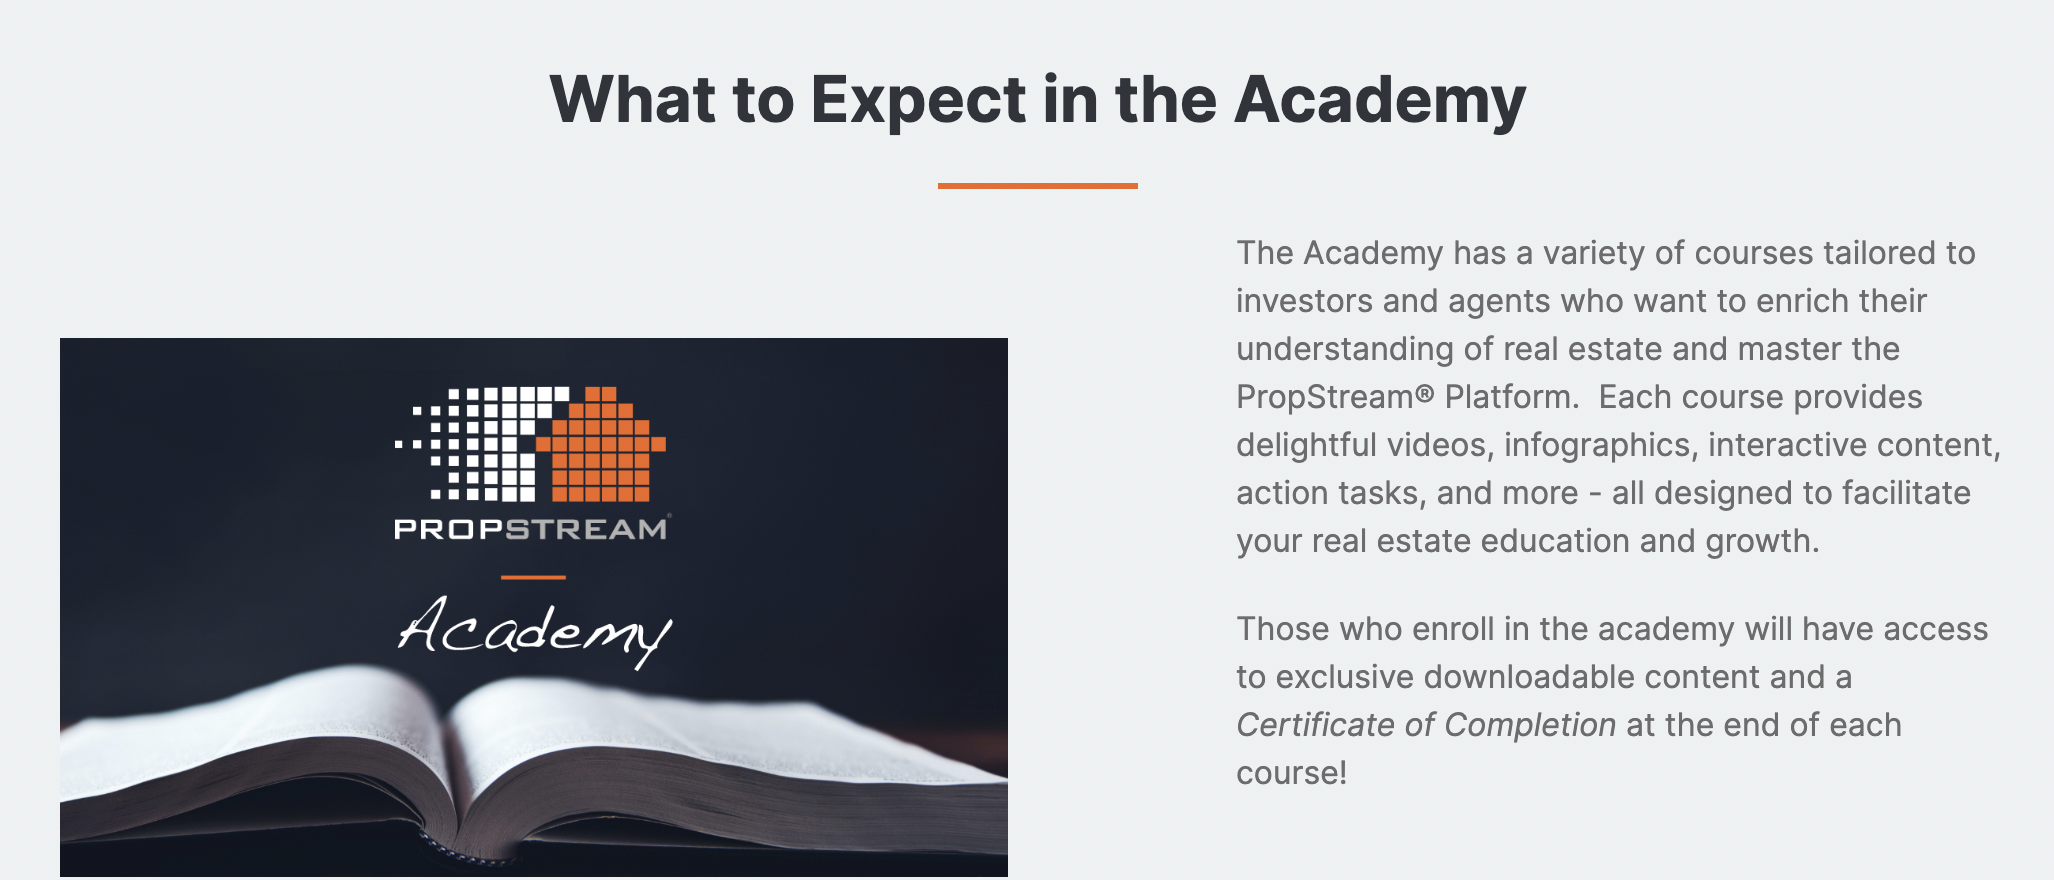 PropStream Academy